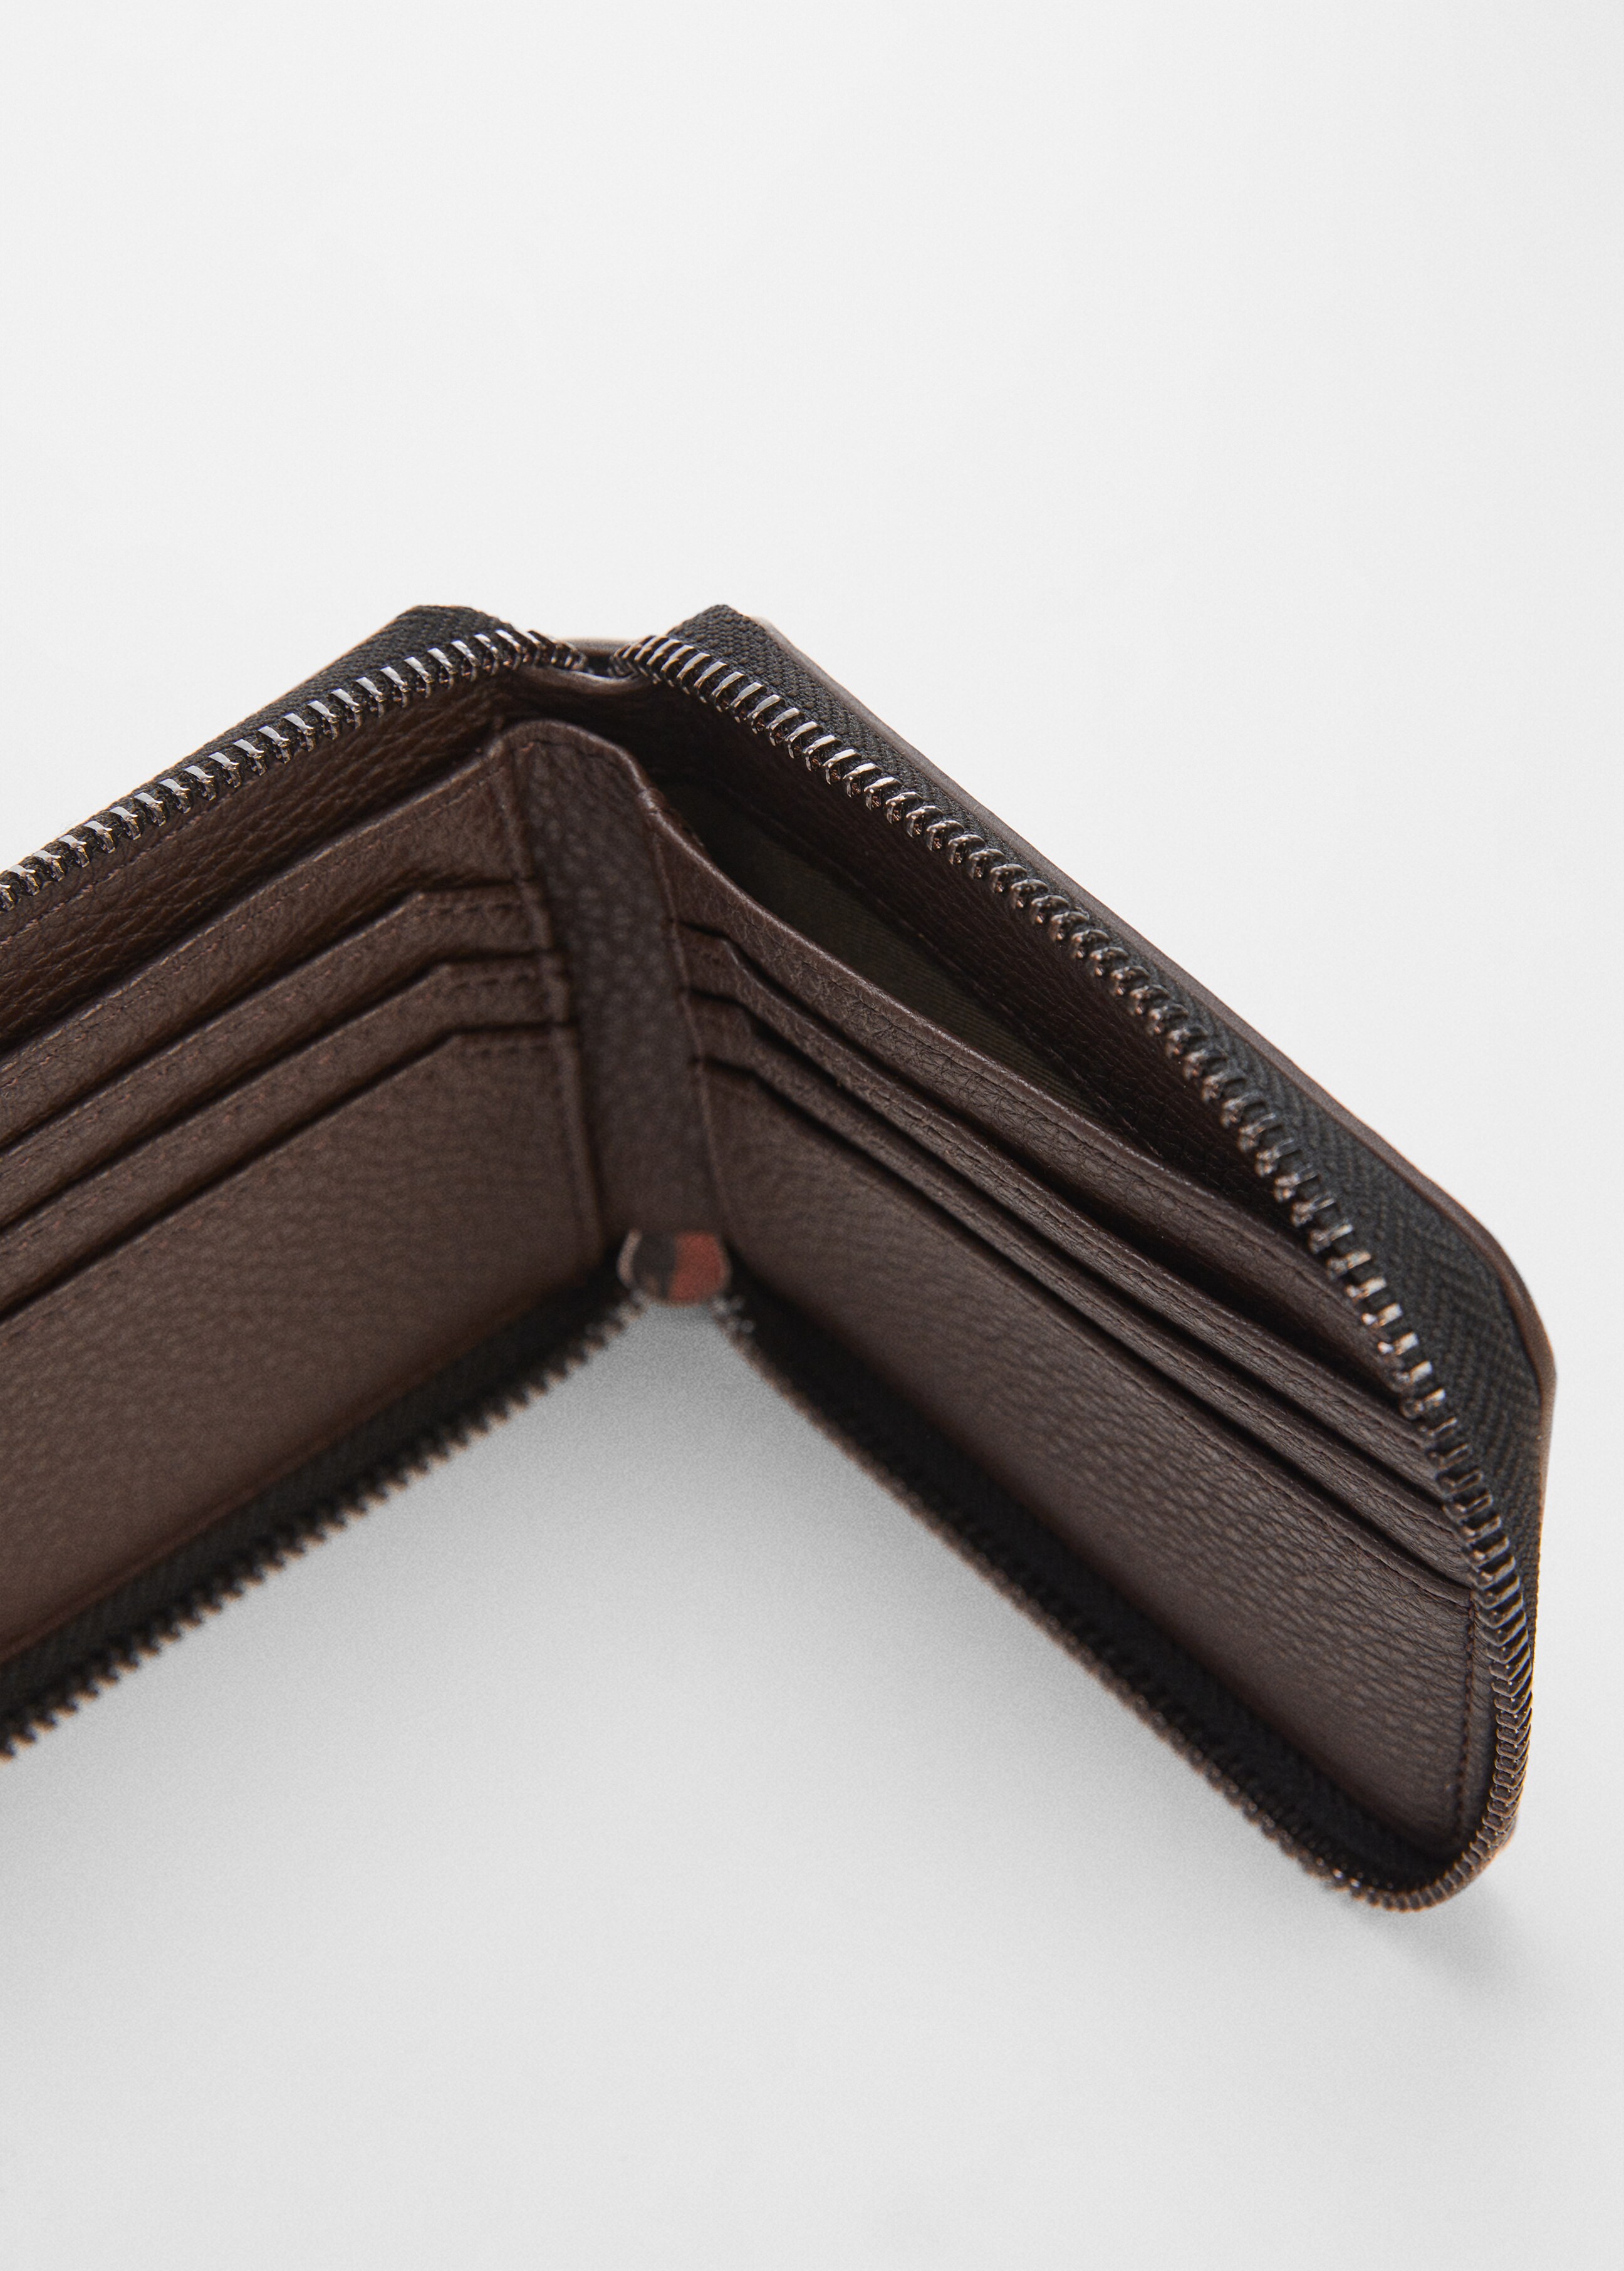 Anti-contactless wallet - Medium plane